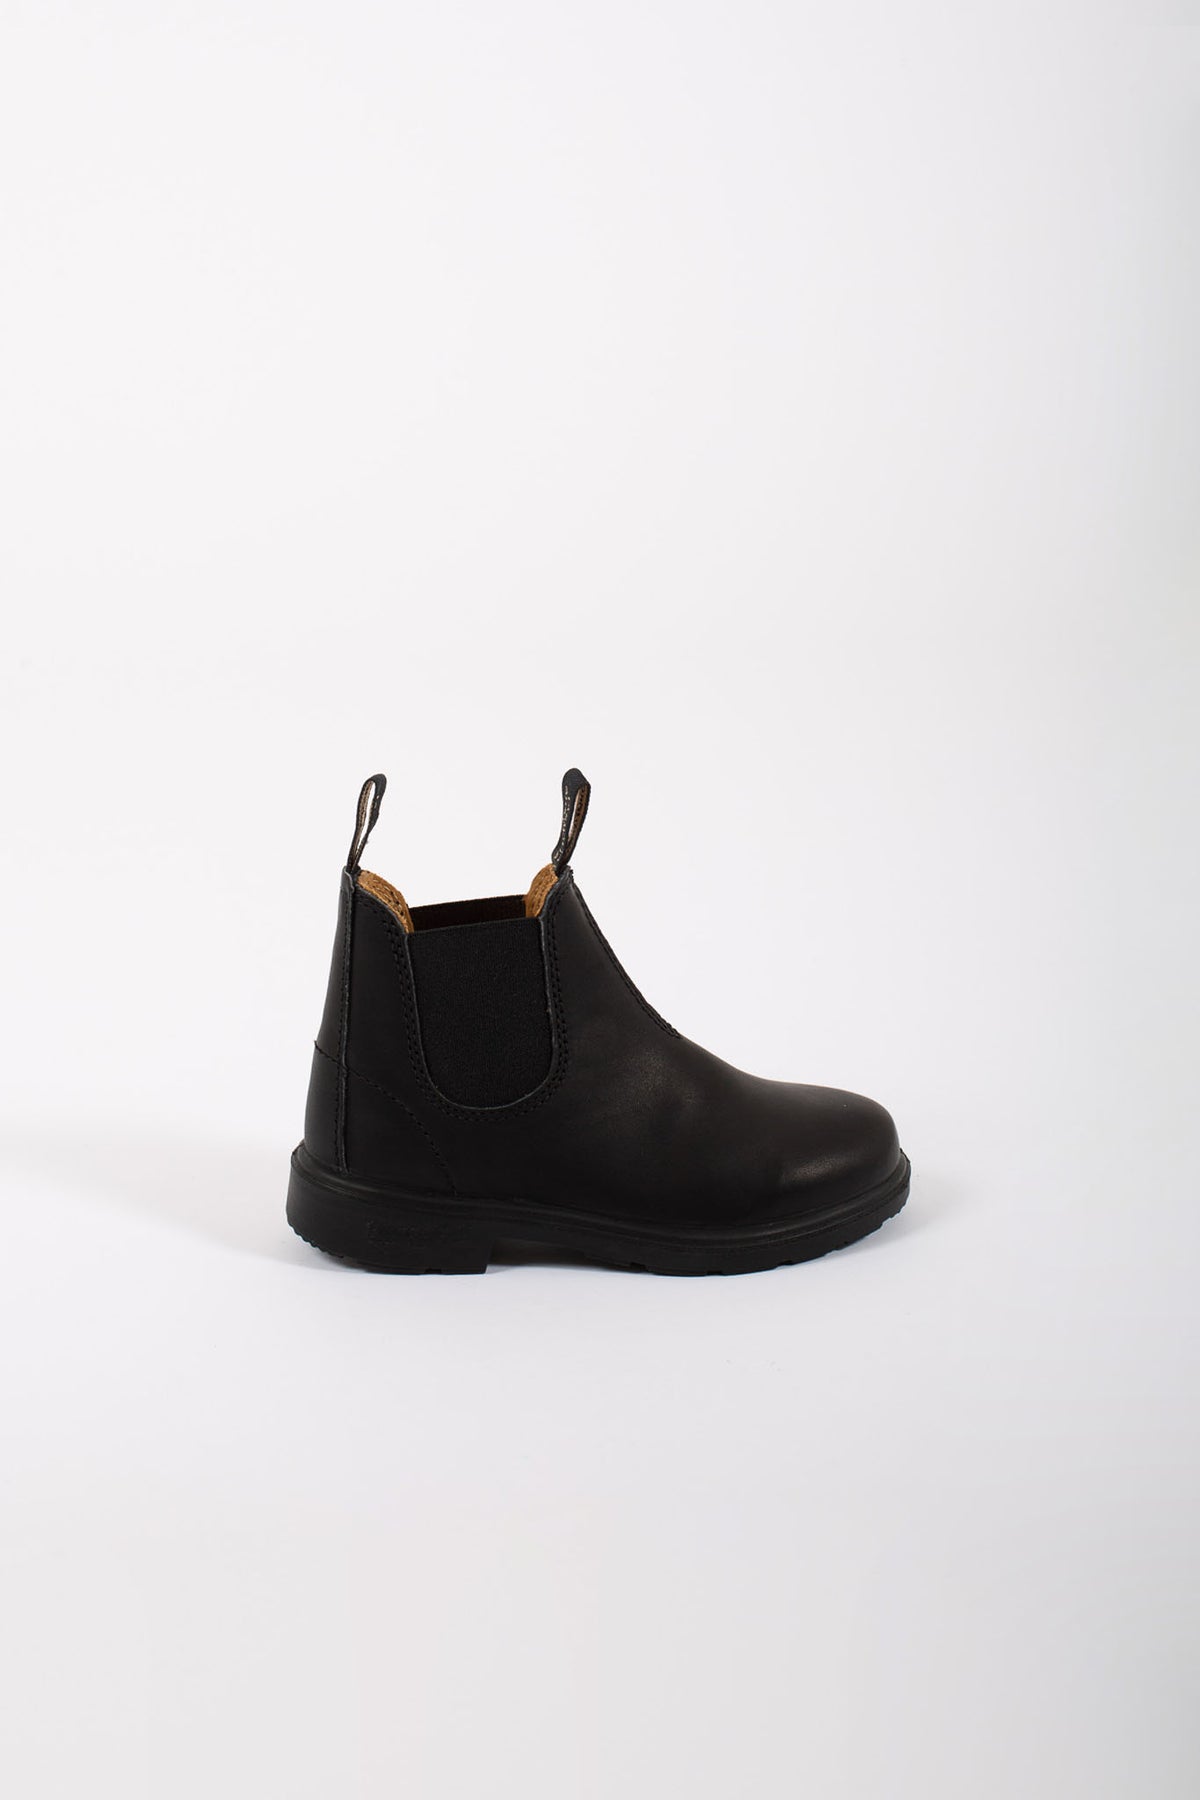 Blundstone Boot Black Premium Leather Nero Unisex Bambini - 1